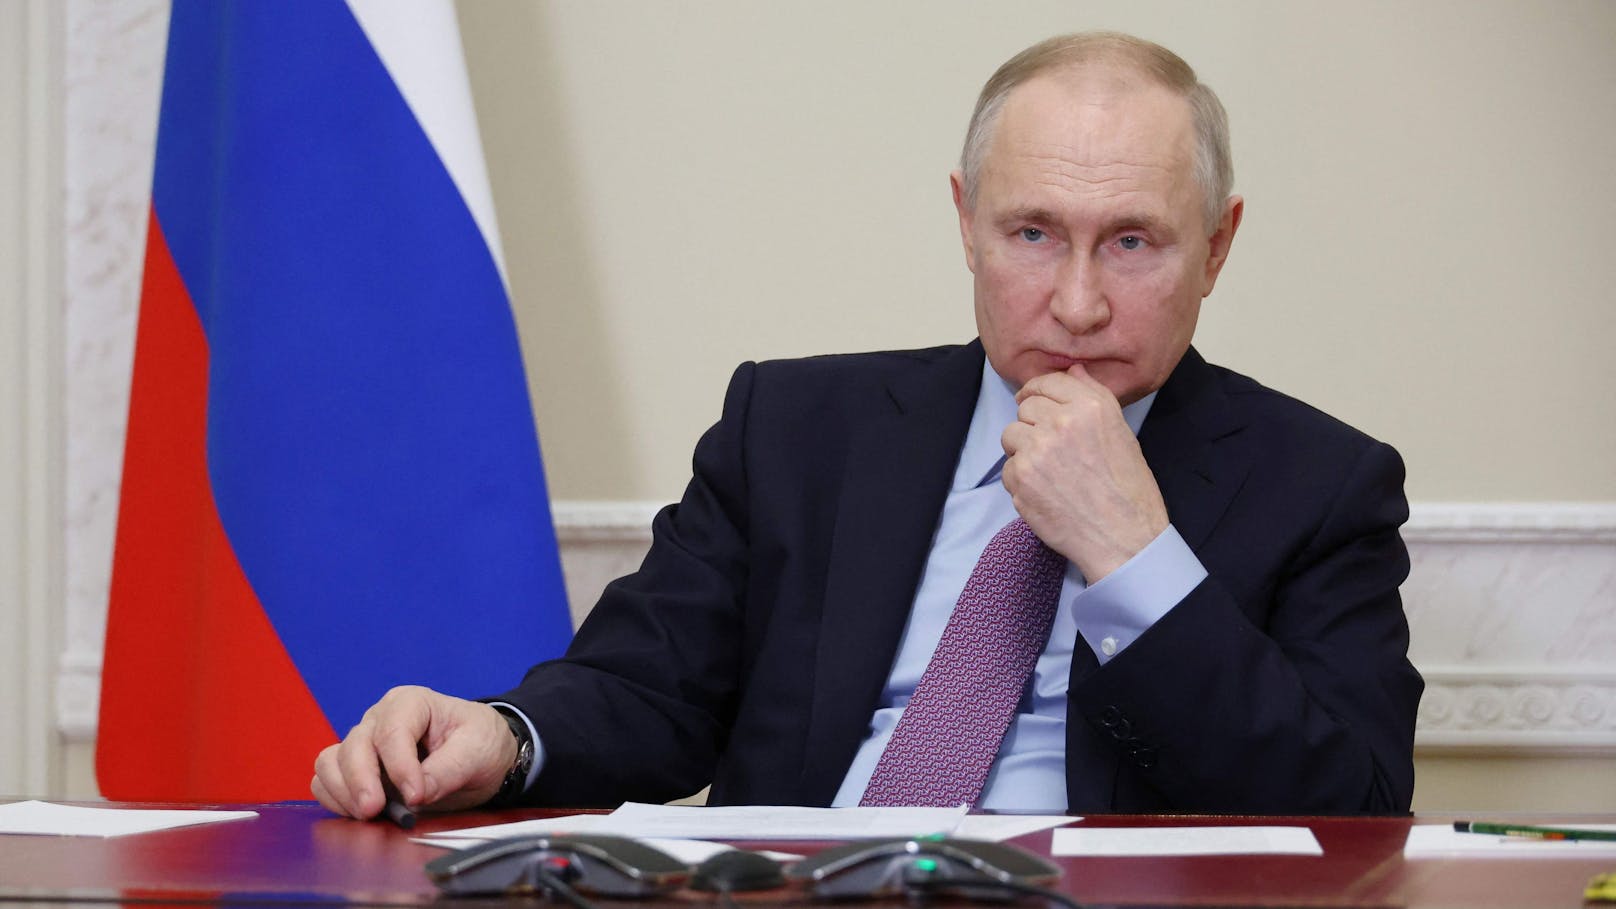 Kreml-Chef <strong>Wladimir Putin</strong> droht offenbar Gefahr aus den eigenen Reihen.